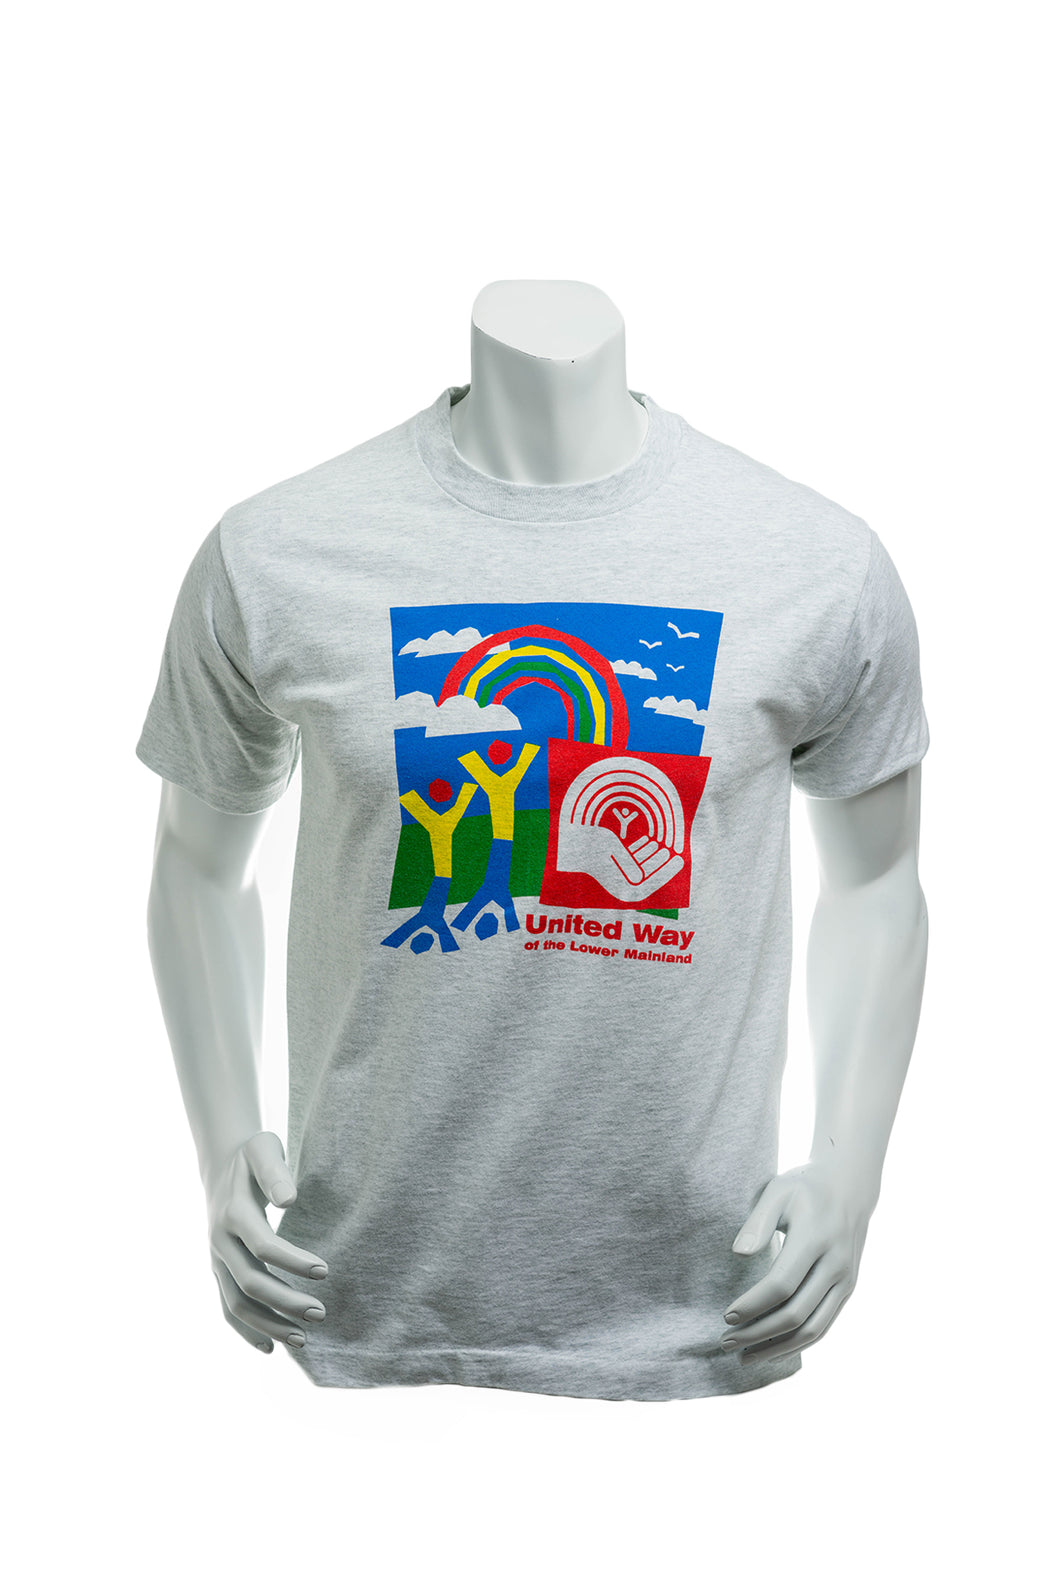 Vintage 90's United Way of the Lower Mainland Single Stitch T-Shirt Men's Medium